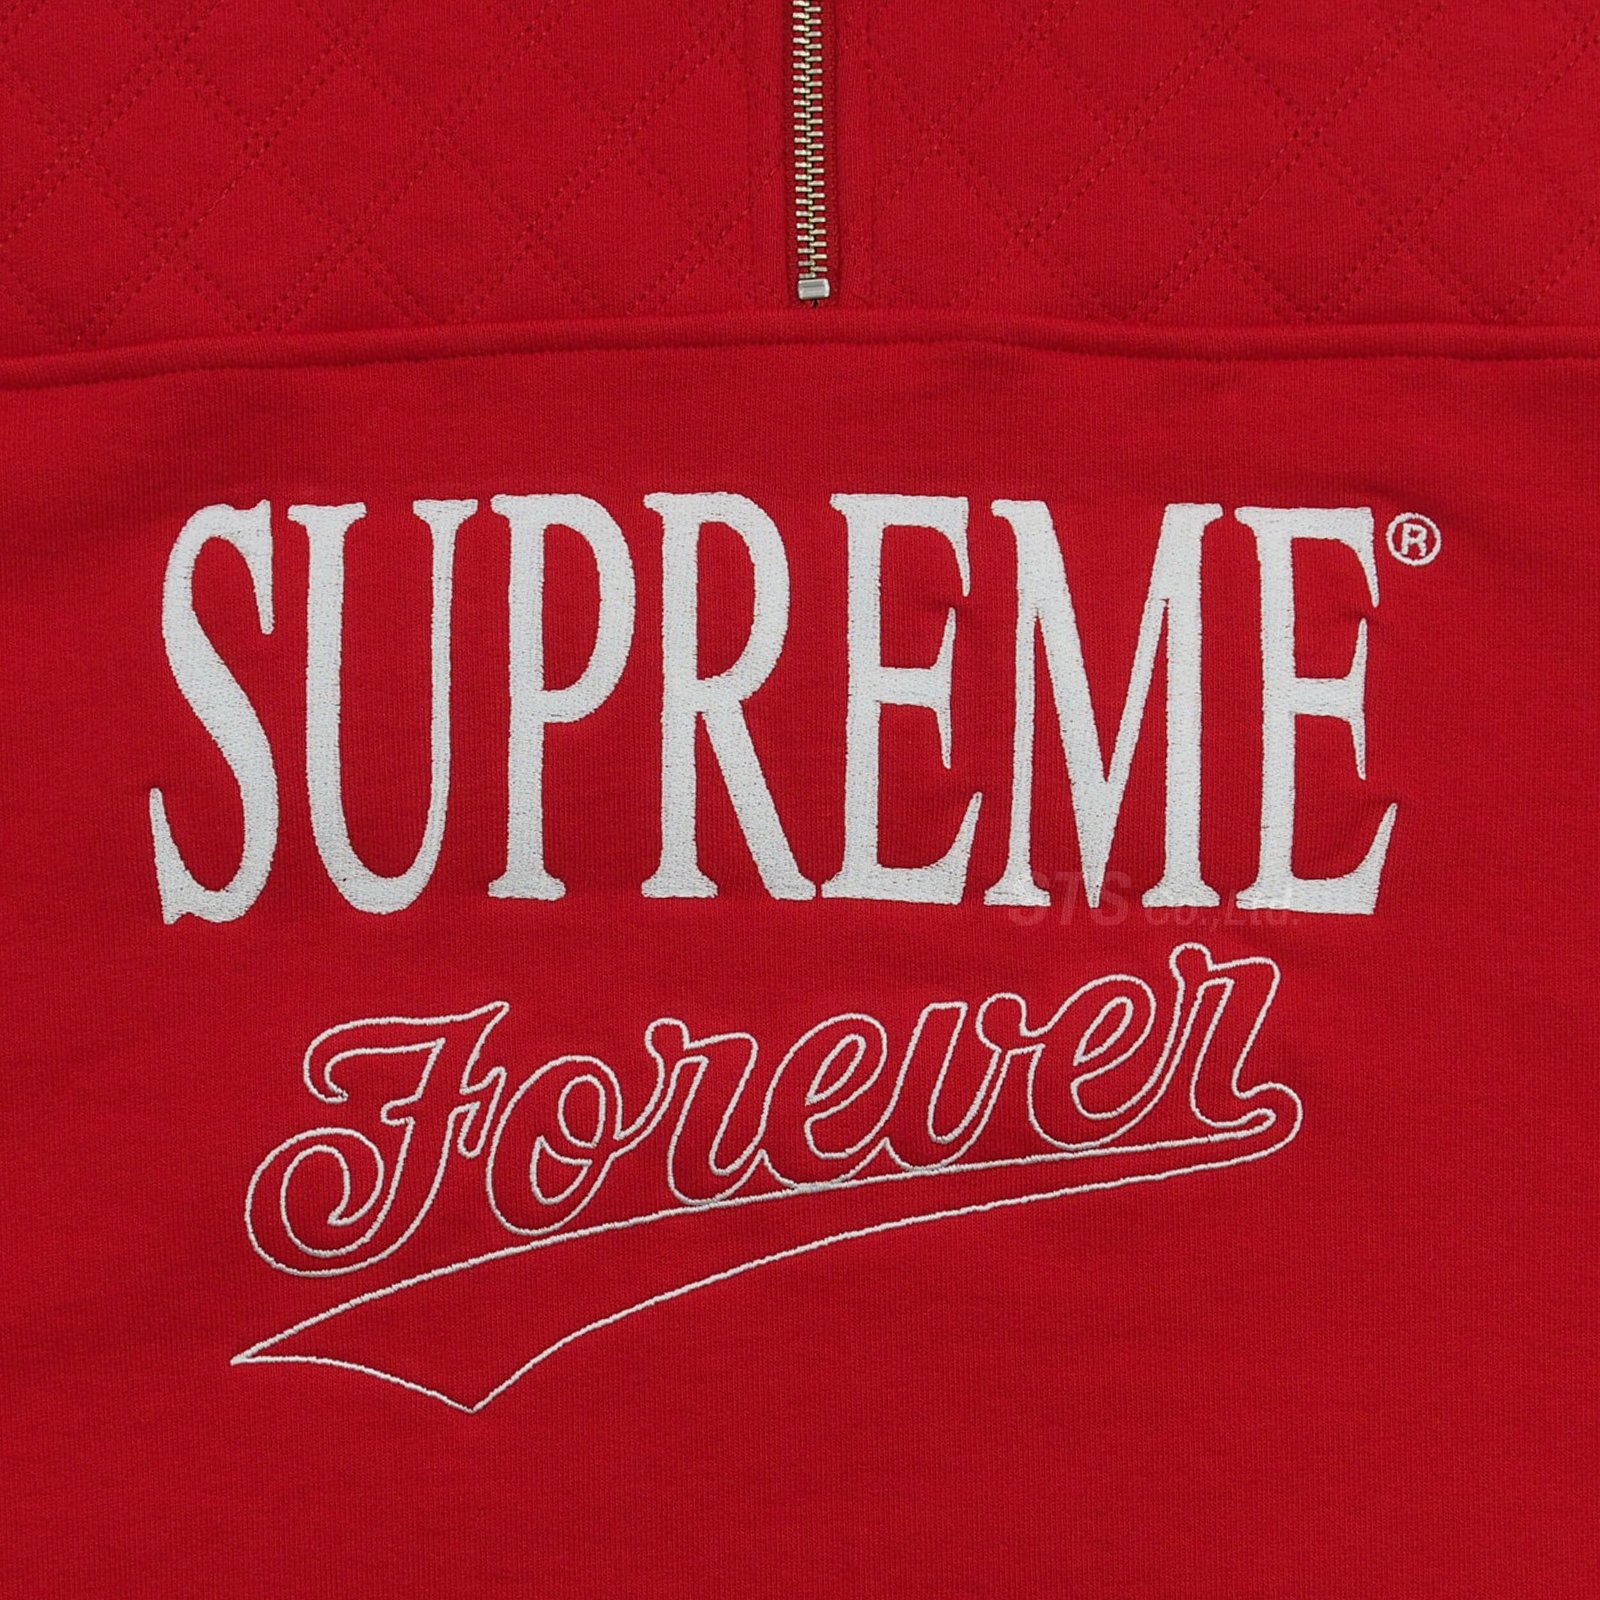 Supreme Forever Half Zip Sweatshirt SS 19 - Stadium Goods